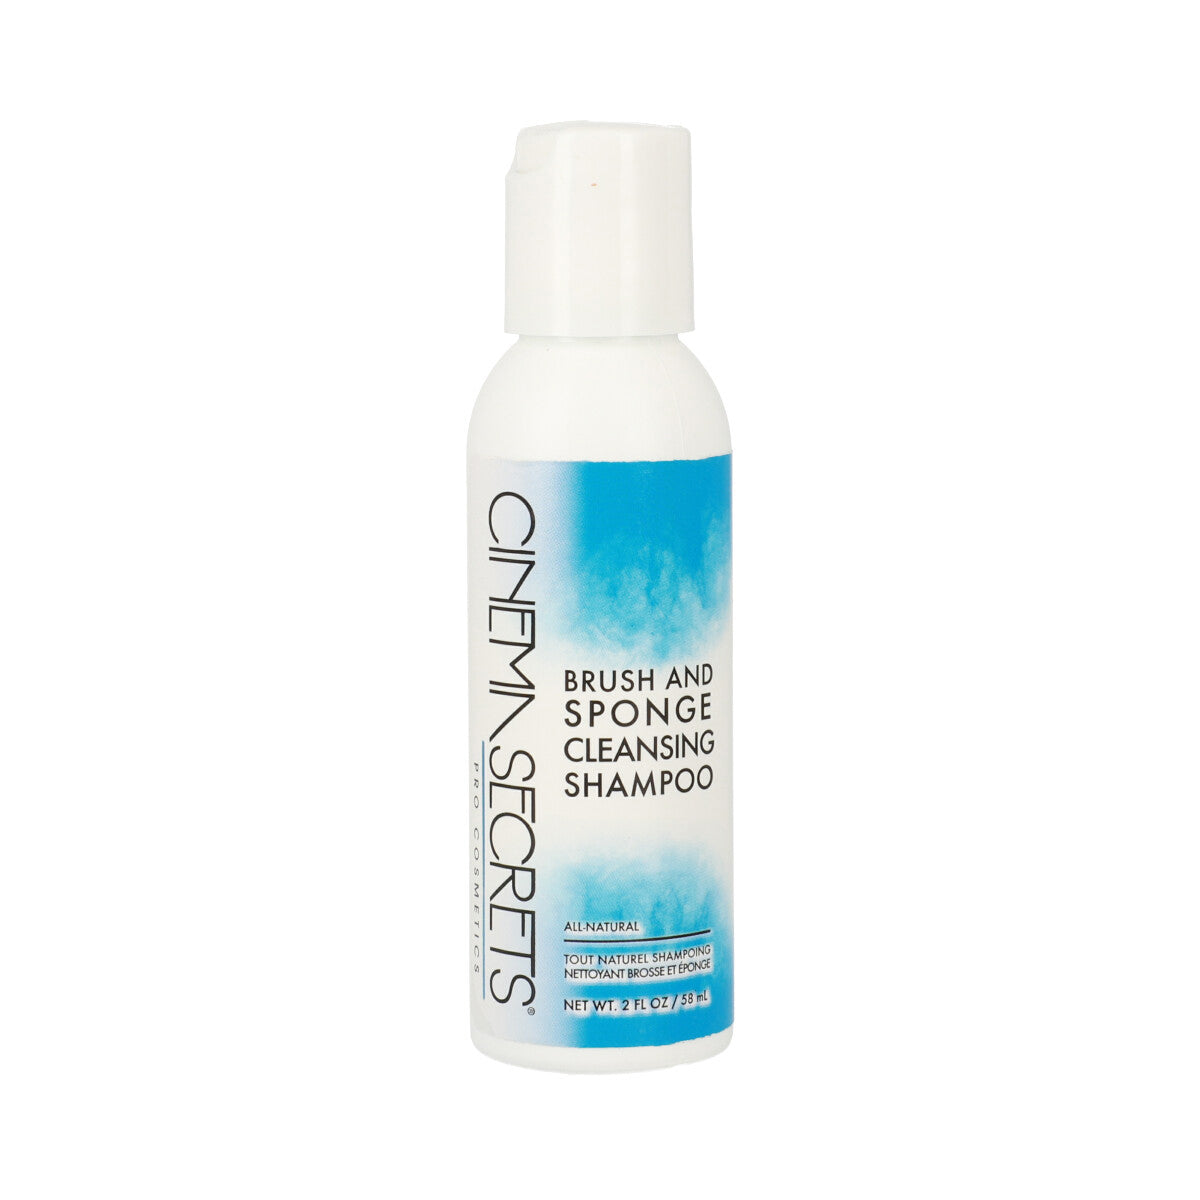 Brush and Sponge Cleansing Shampoo 2oz